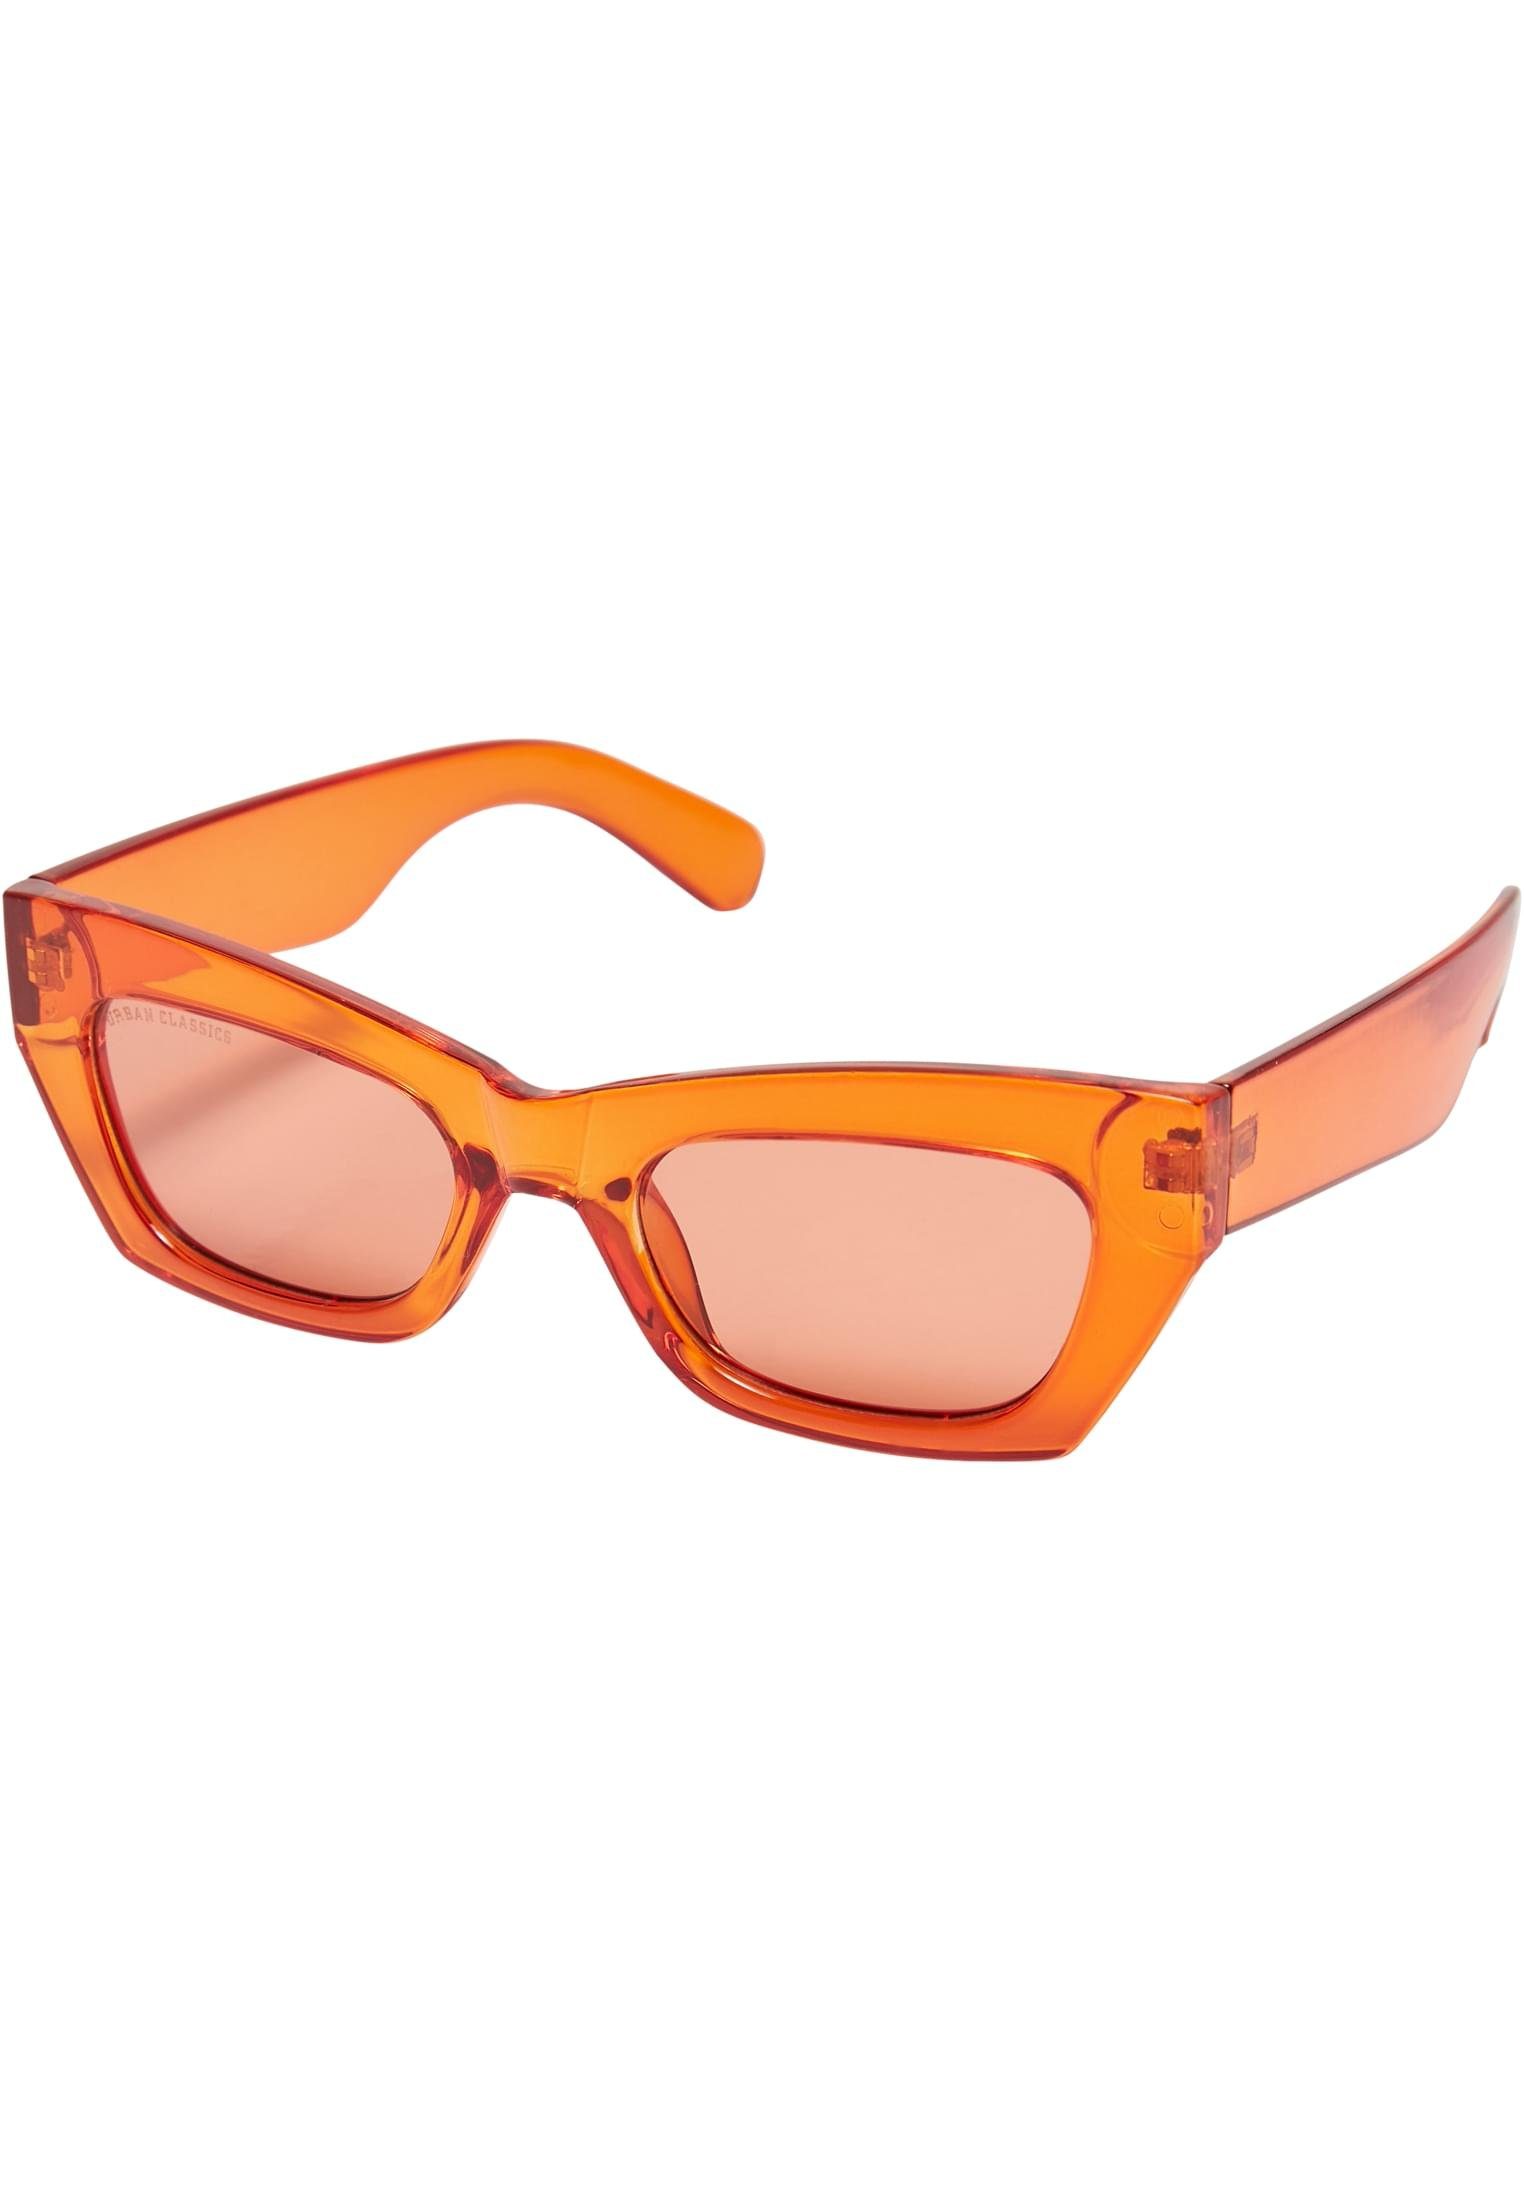 URBAN transparentvintageorange Venice Sunglasses CLASSICS Sonnenbrille Unisex